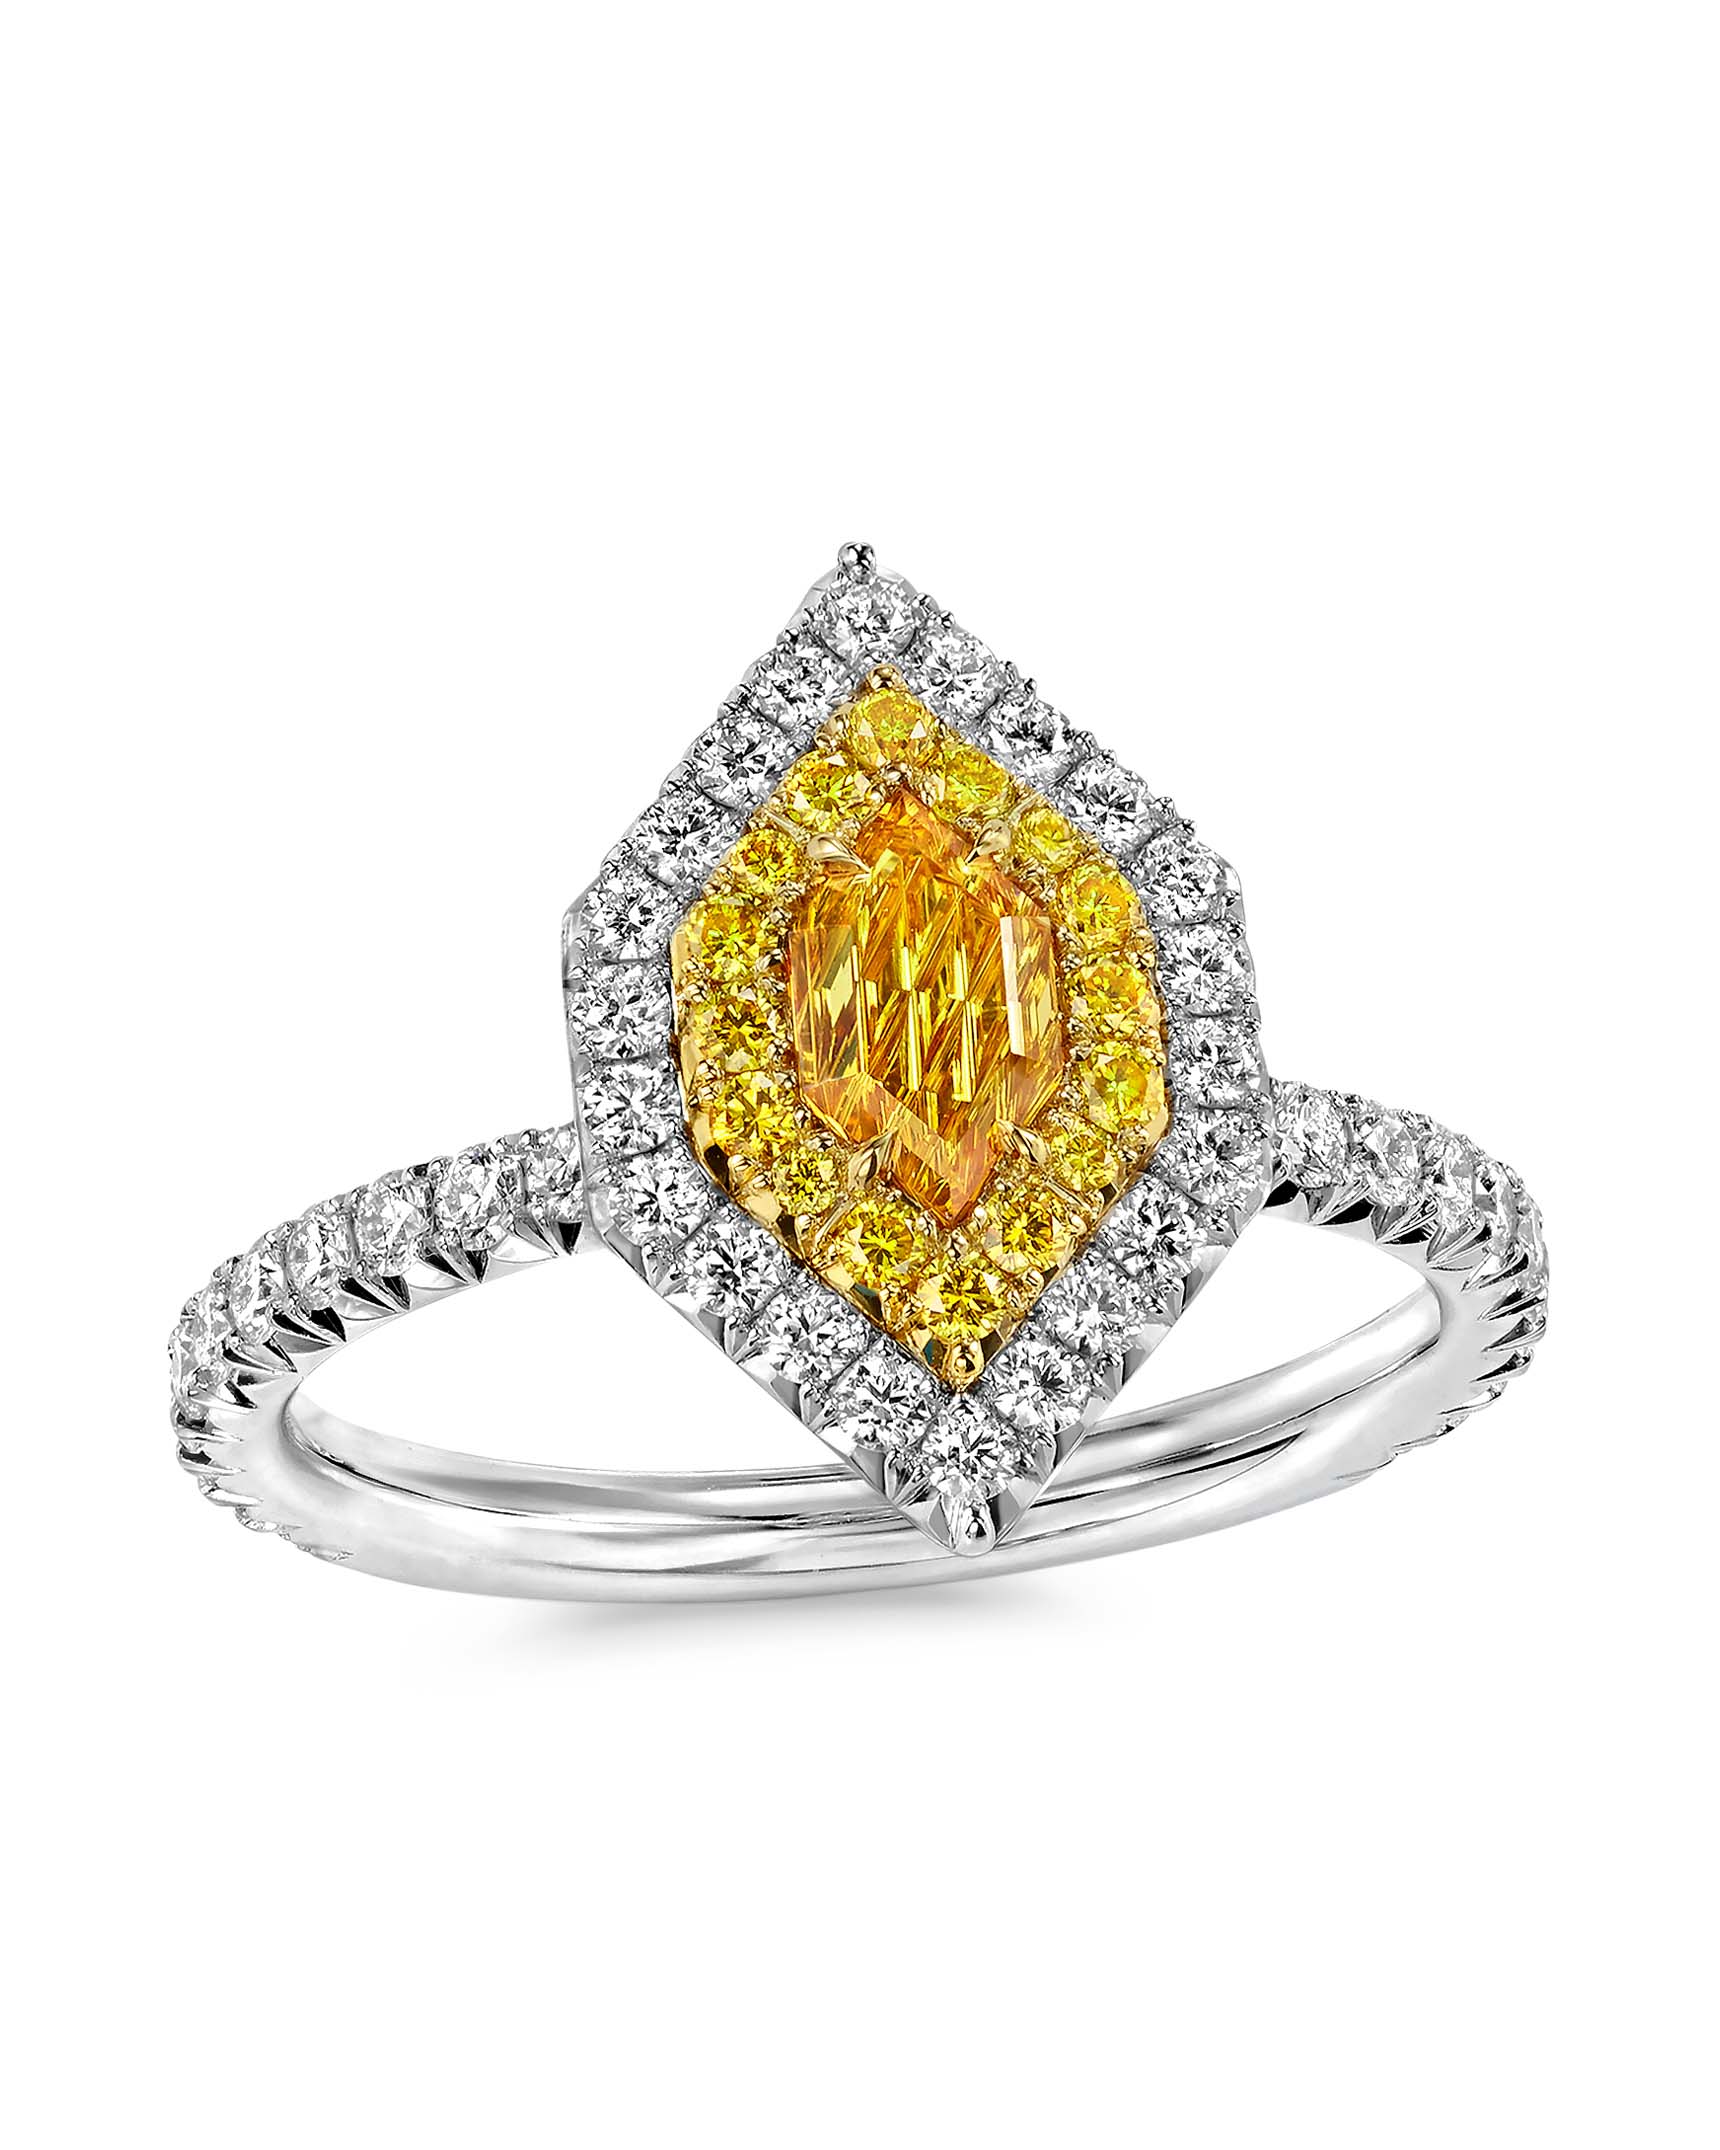 Fancy Intense Orange-Yellow Diamond Ring